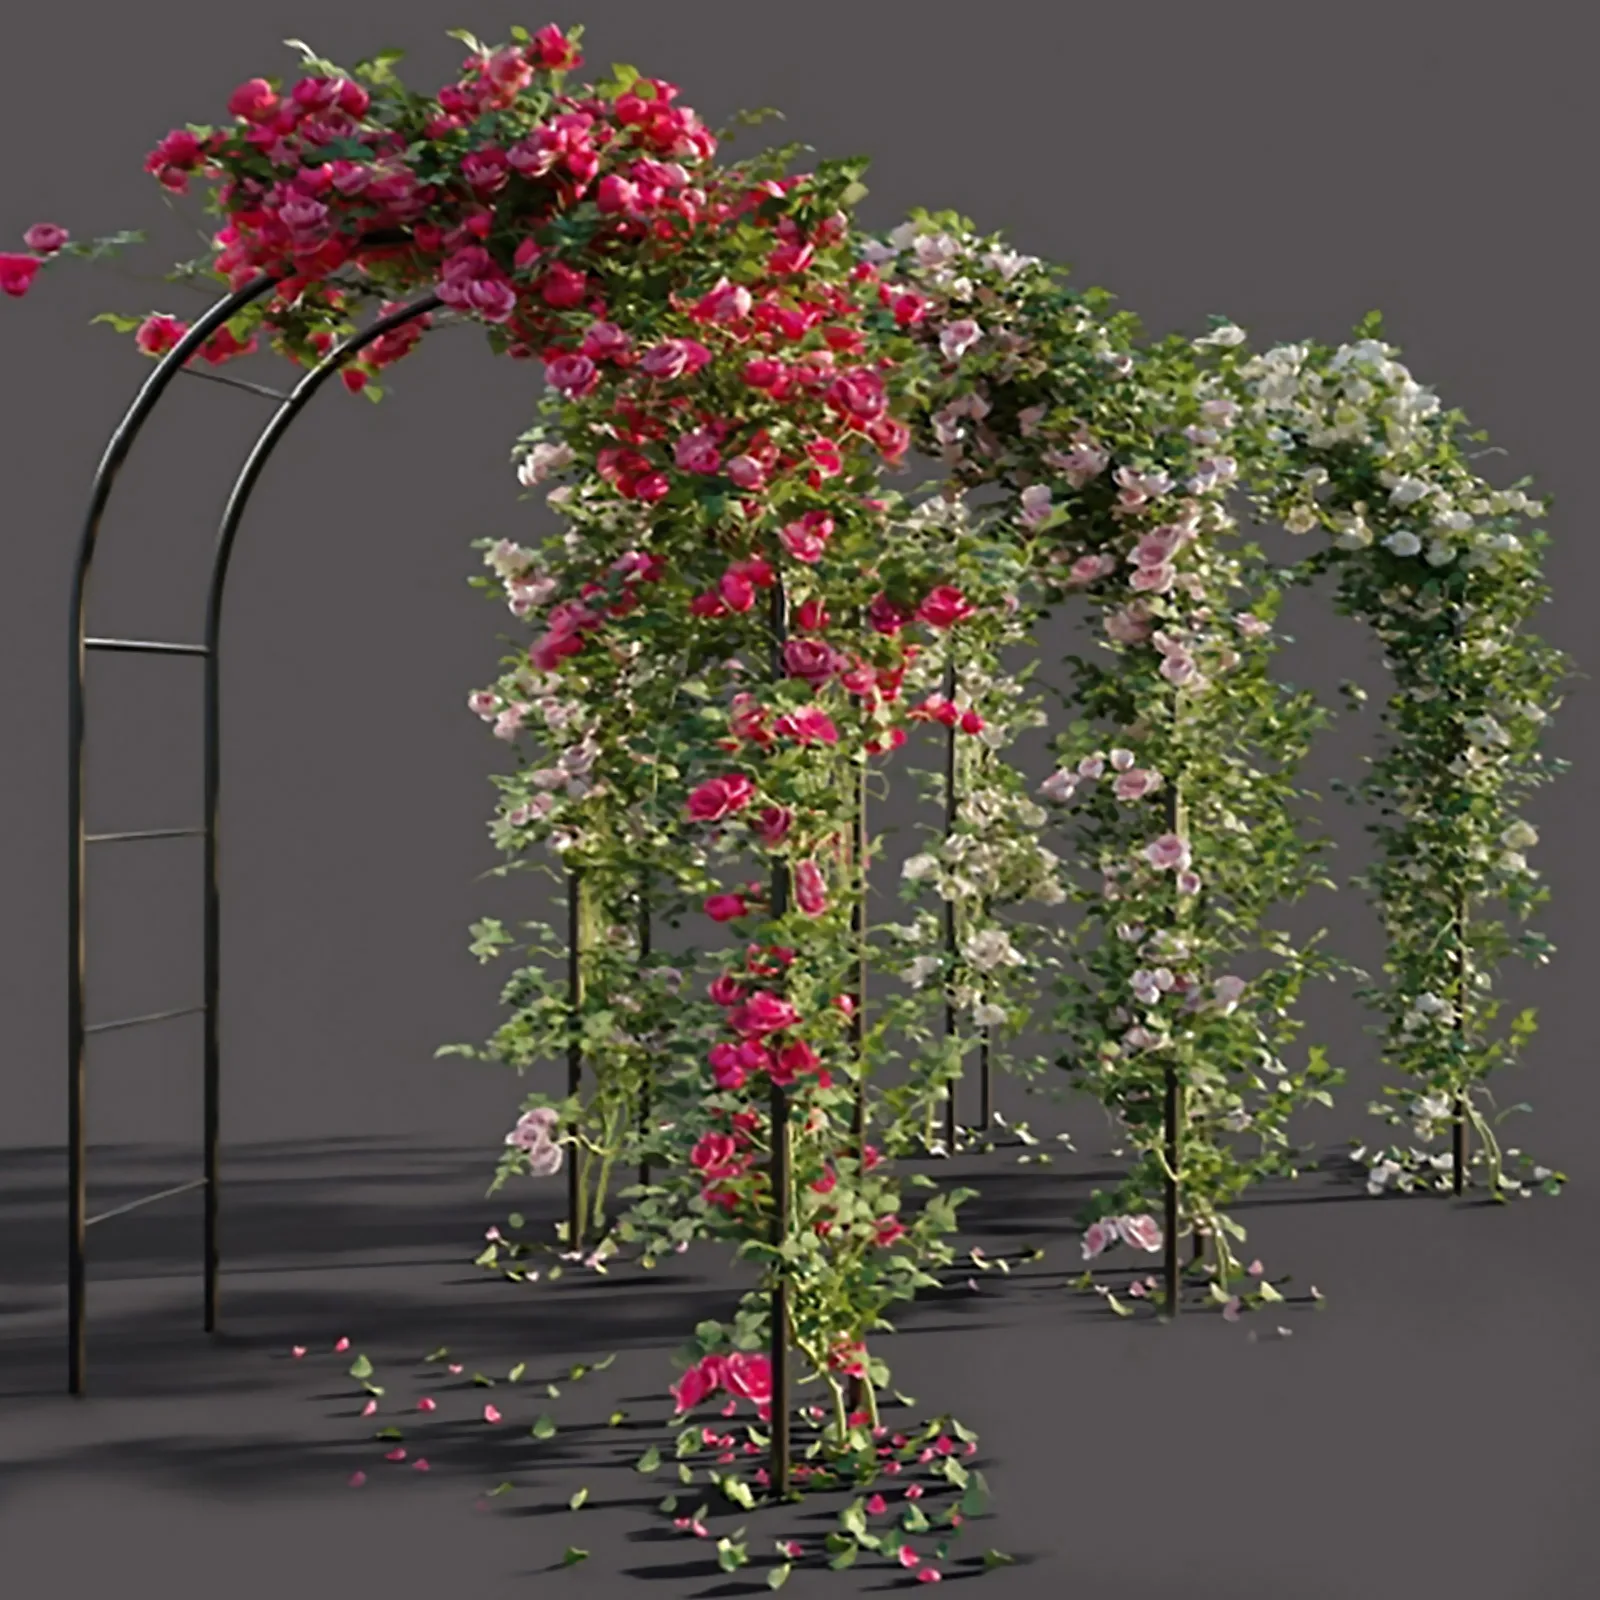 Litgrow Wedding Horticulture Iron Frame Flower Arch Flower Frame 